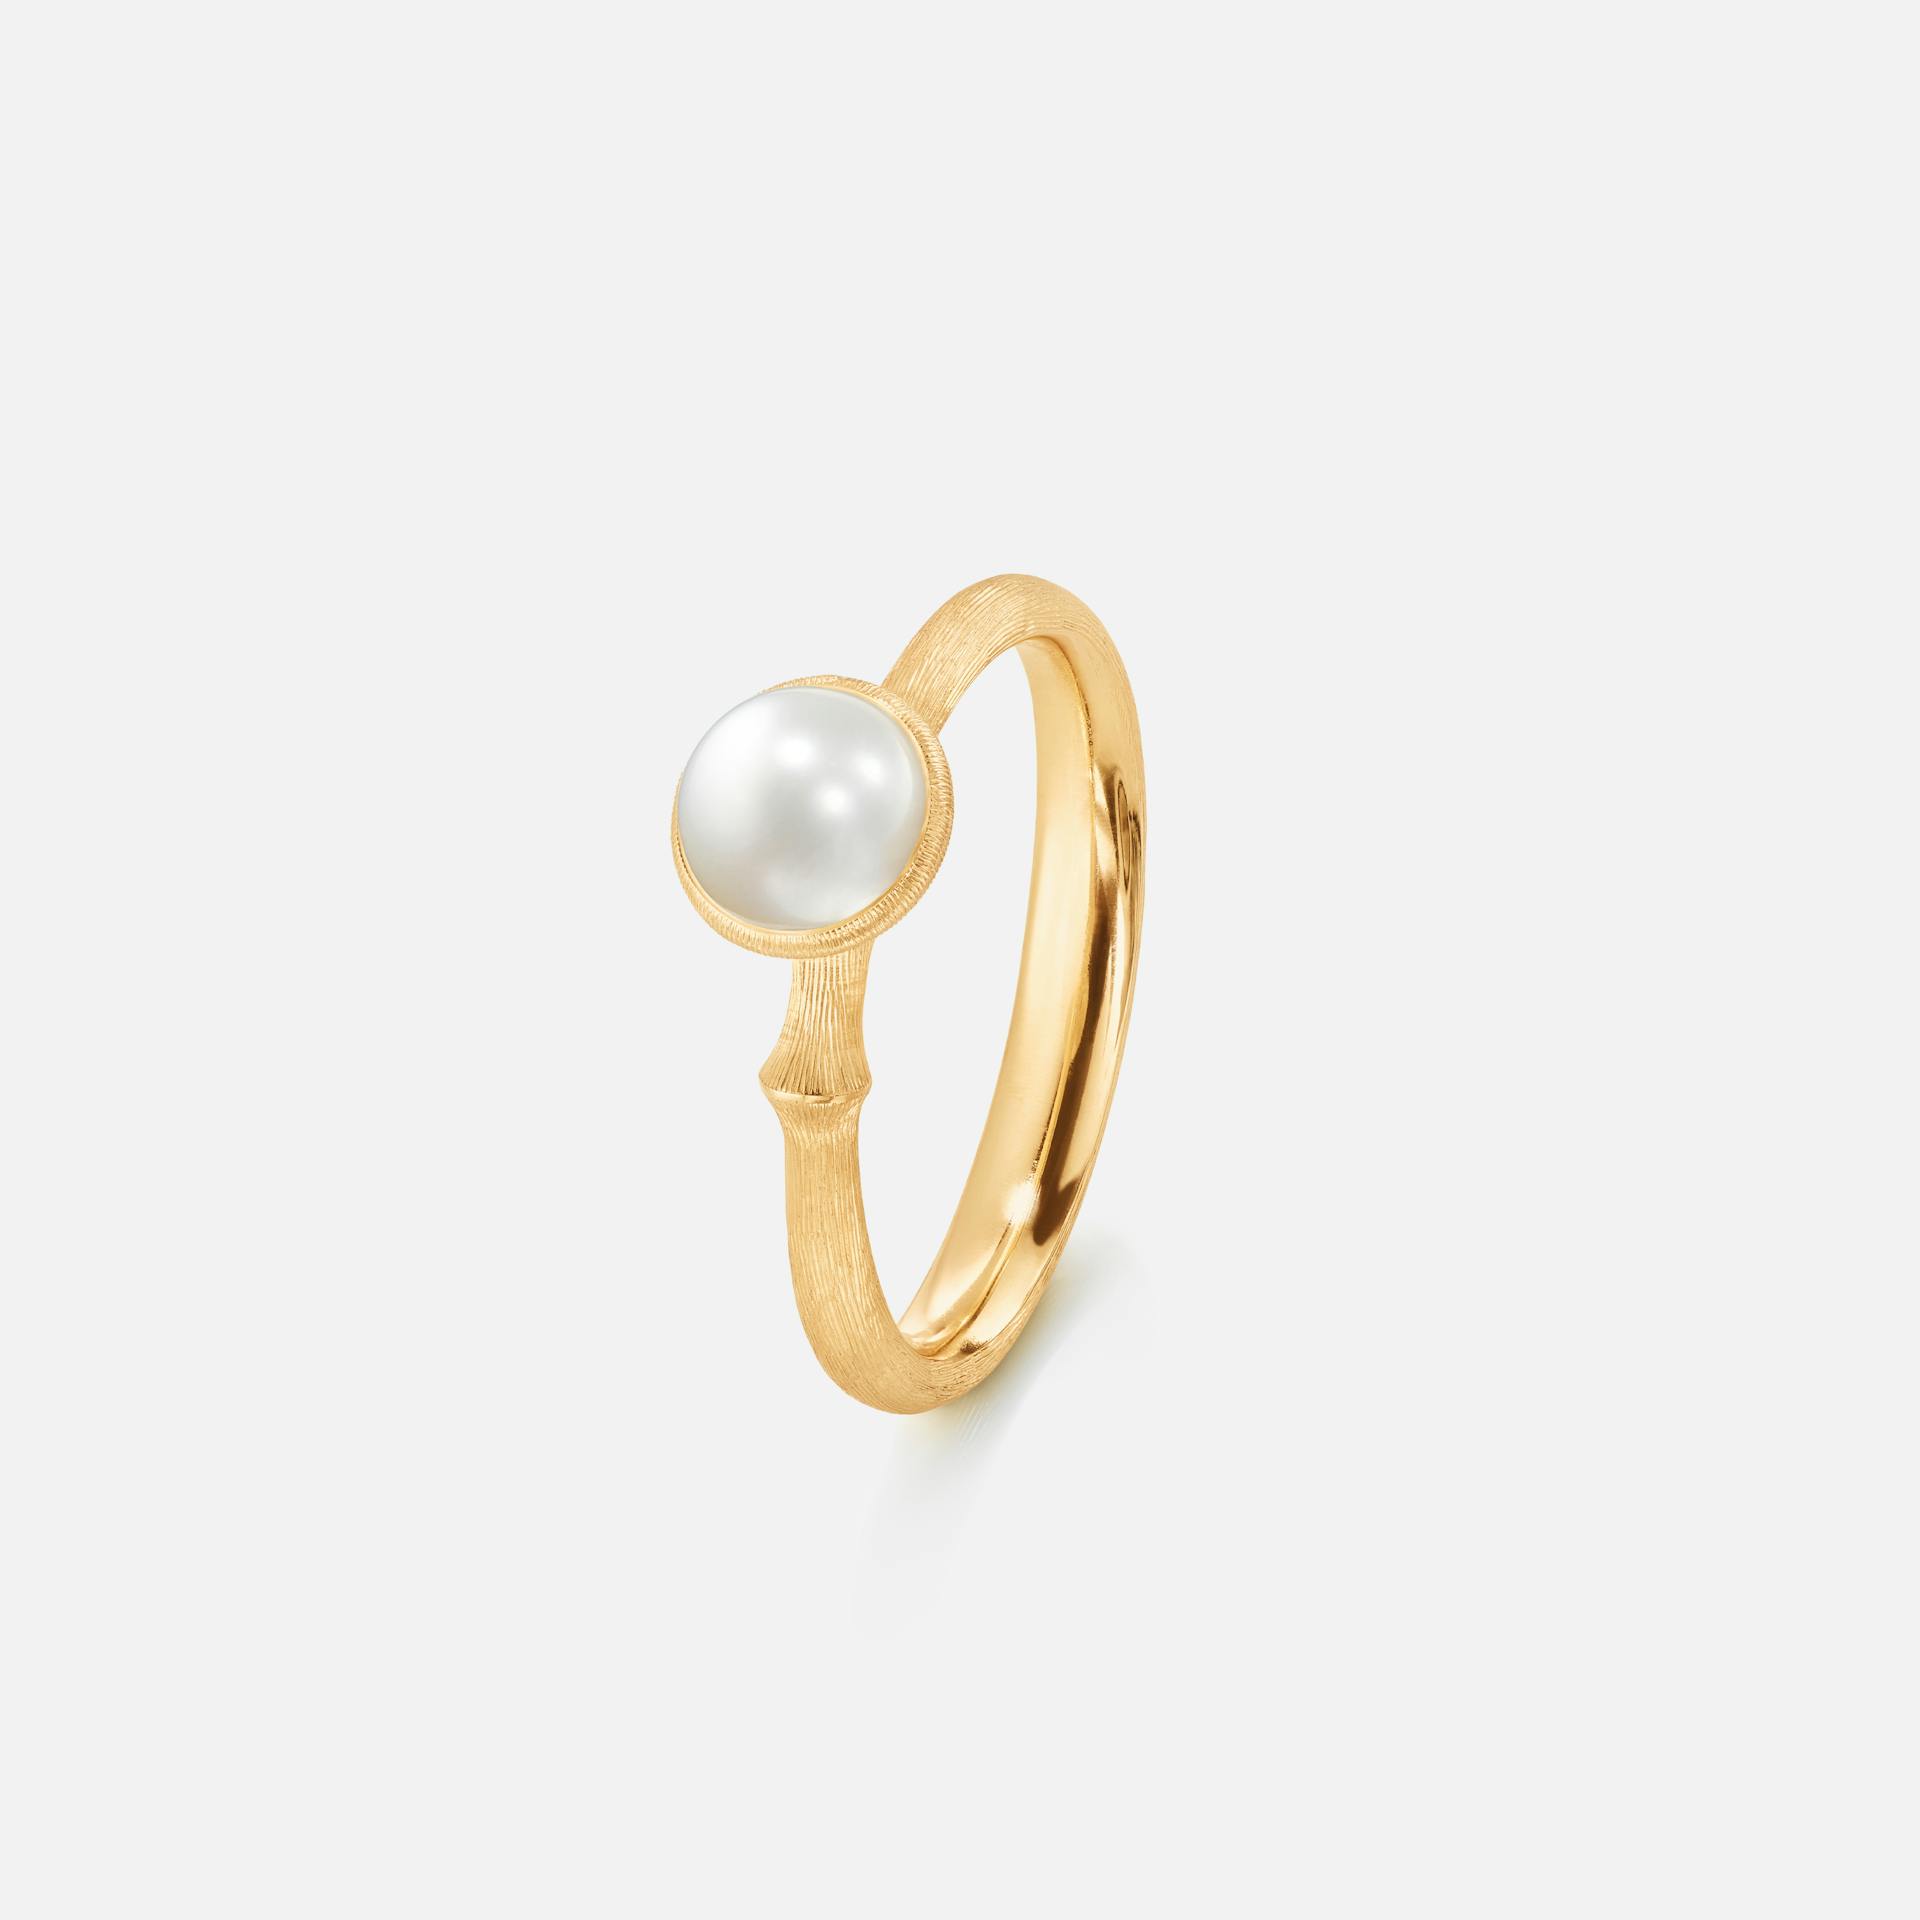 Lotus-ring størrelse 0 i 18 karat gult guld med en hvid perle | Ole Lynggaard Copenhagen